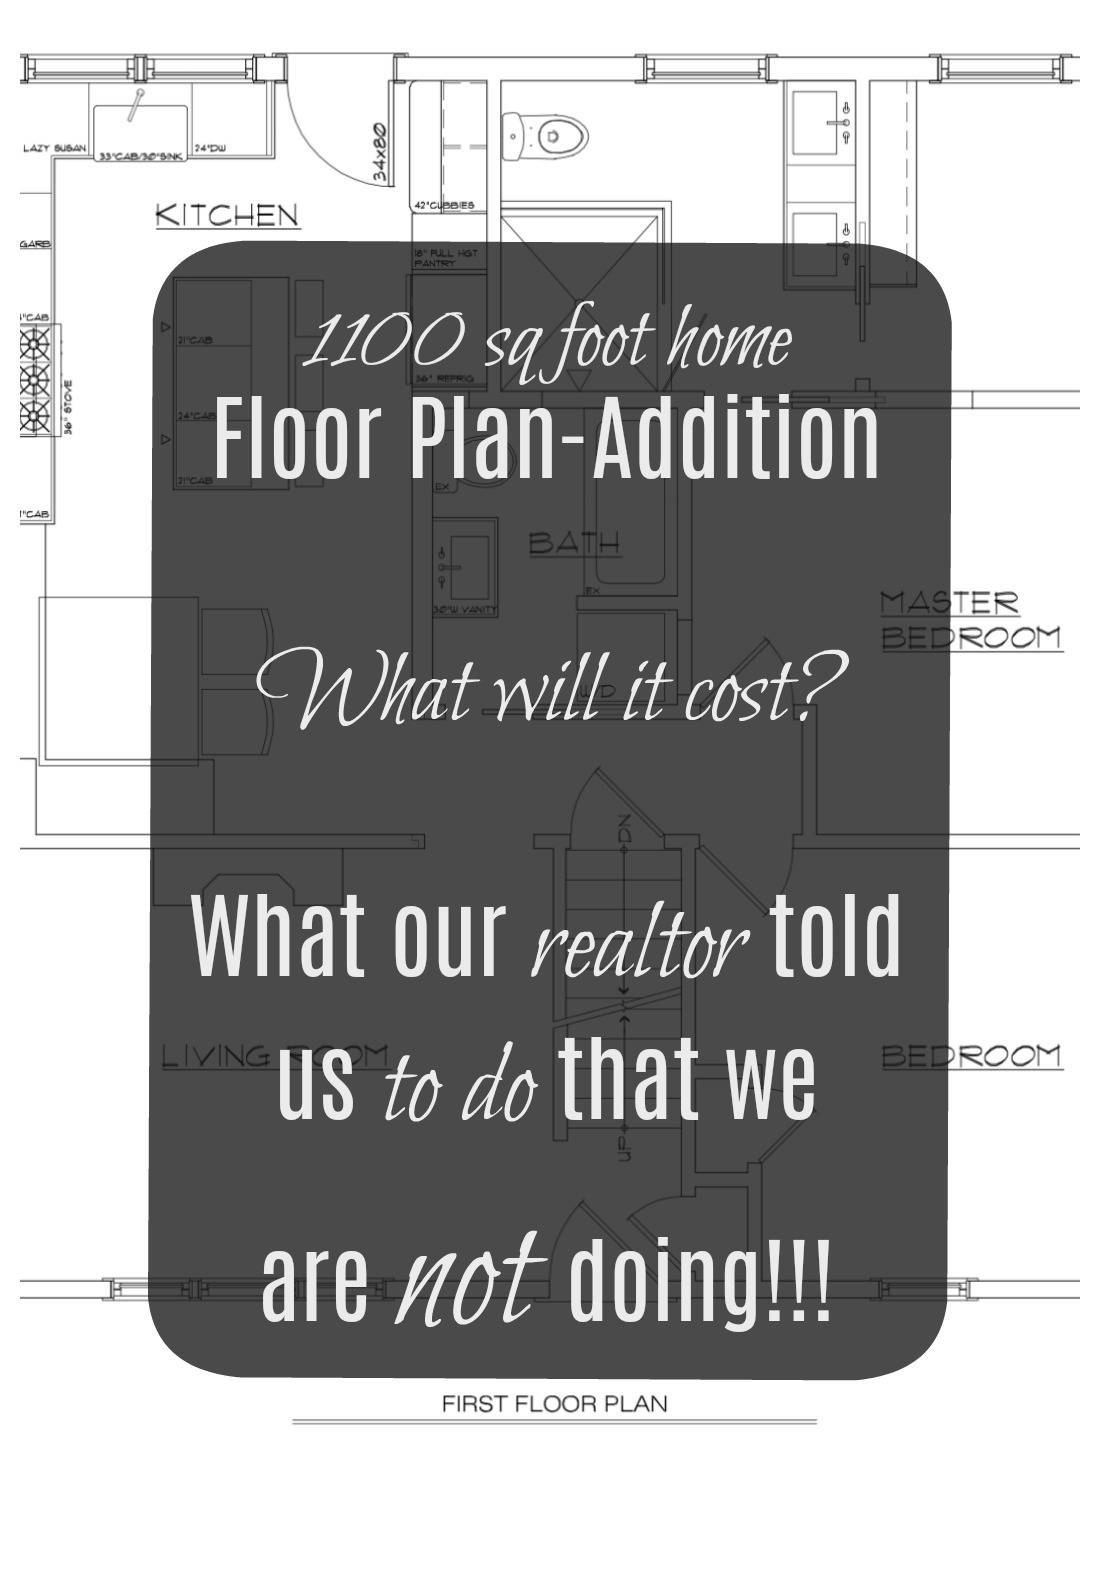 1100 sq foot- Floor Plan Addition 